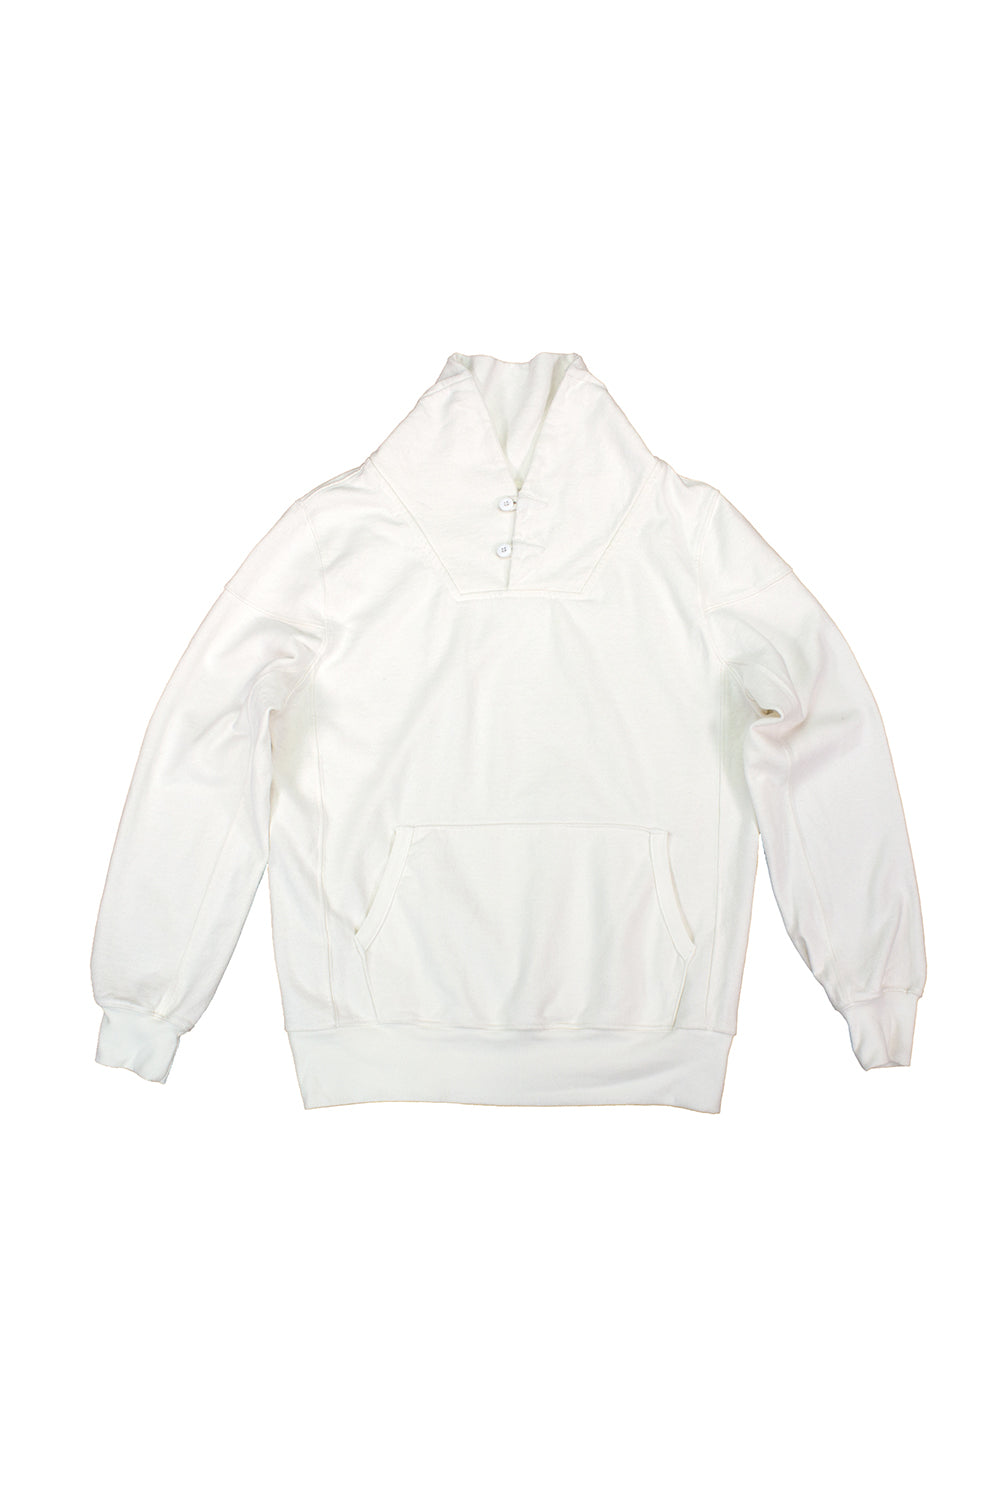 Whittier Sweatshirt | Jungmaven Hemp Clothing & Accessories / Color: Washed White